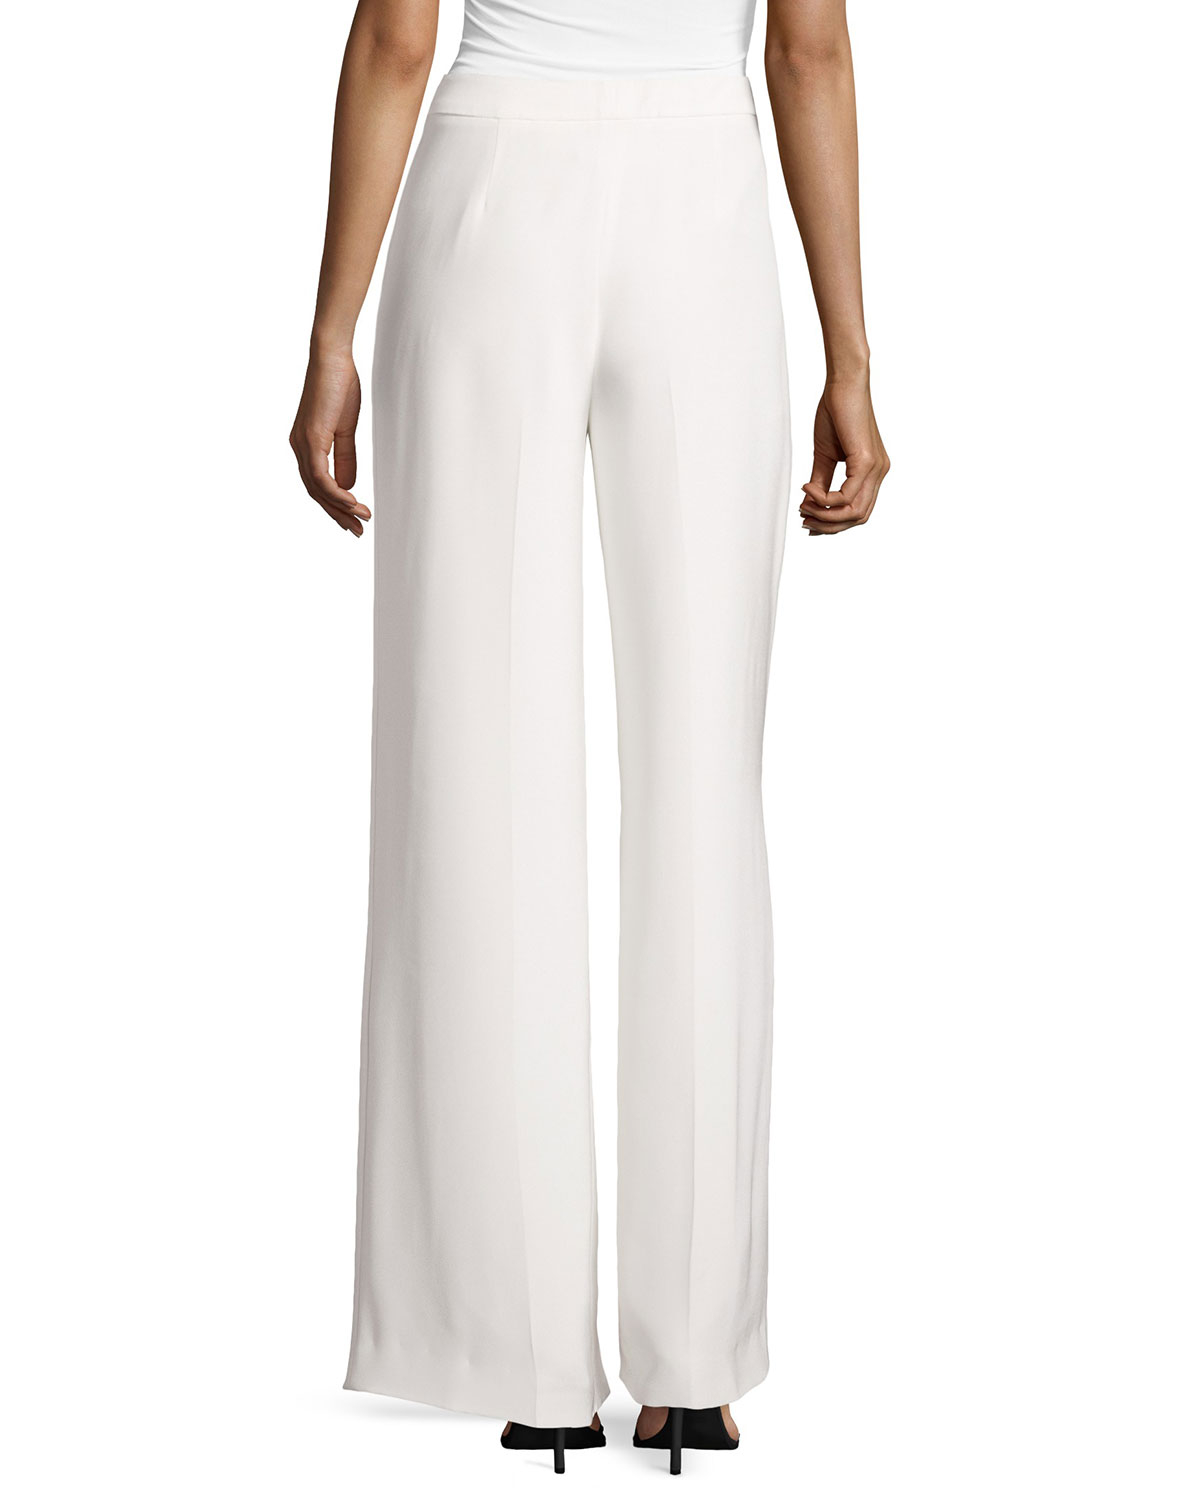 Lyst - Carolina Herrera 6-Ply Wide-Leg Crepe Pants in White